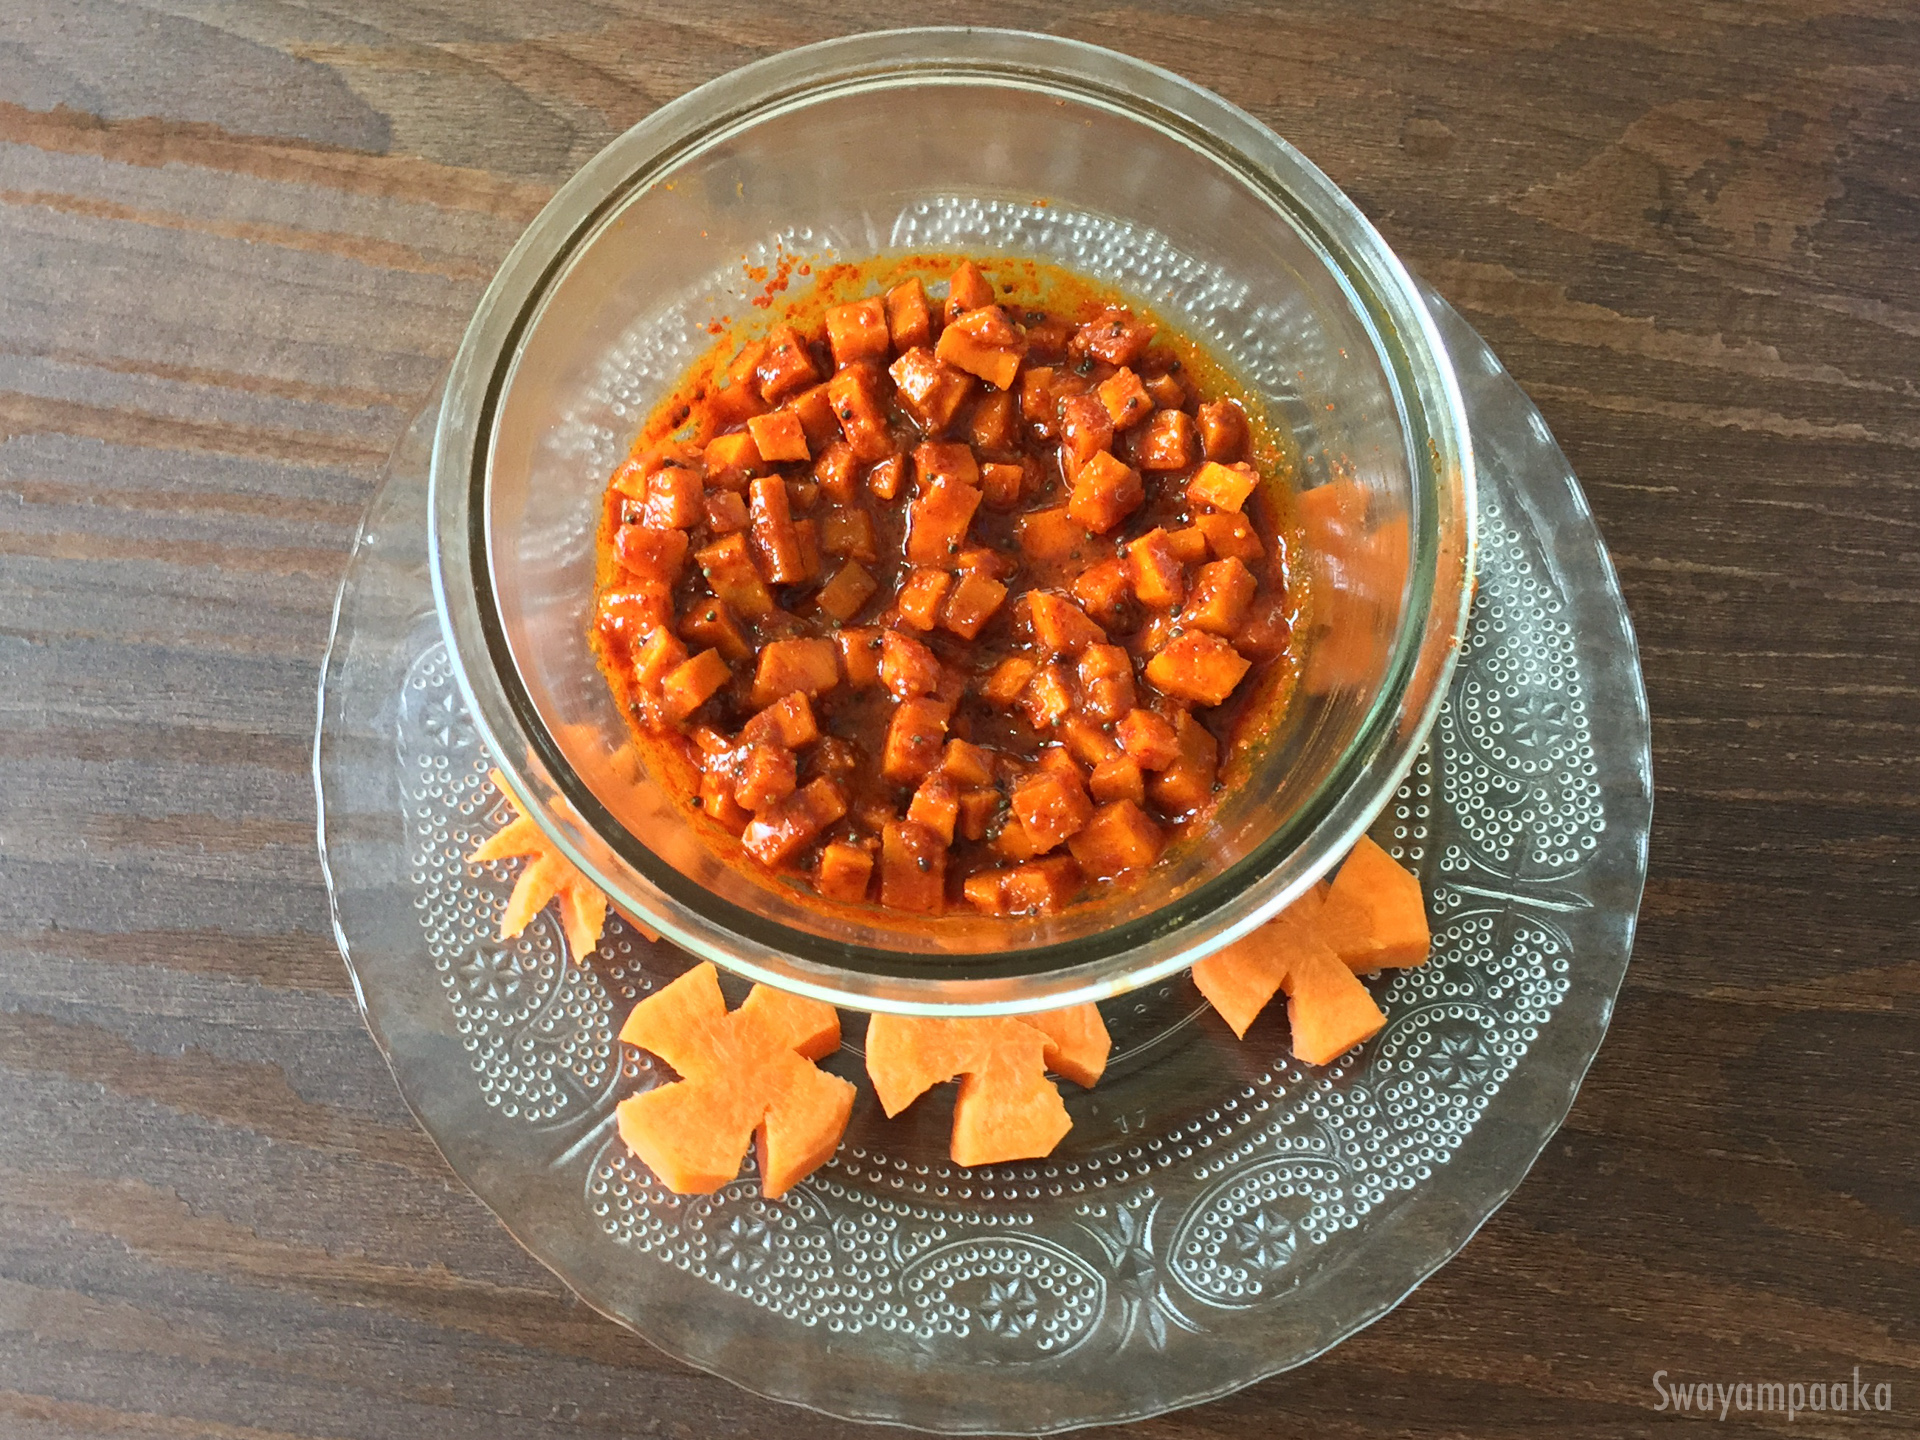 Instant Carrot Pickle | carrot uppinakayi - ಸ್ವಯಂ ಪಾಕ